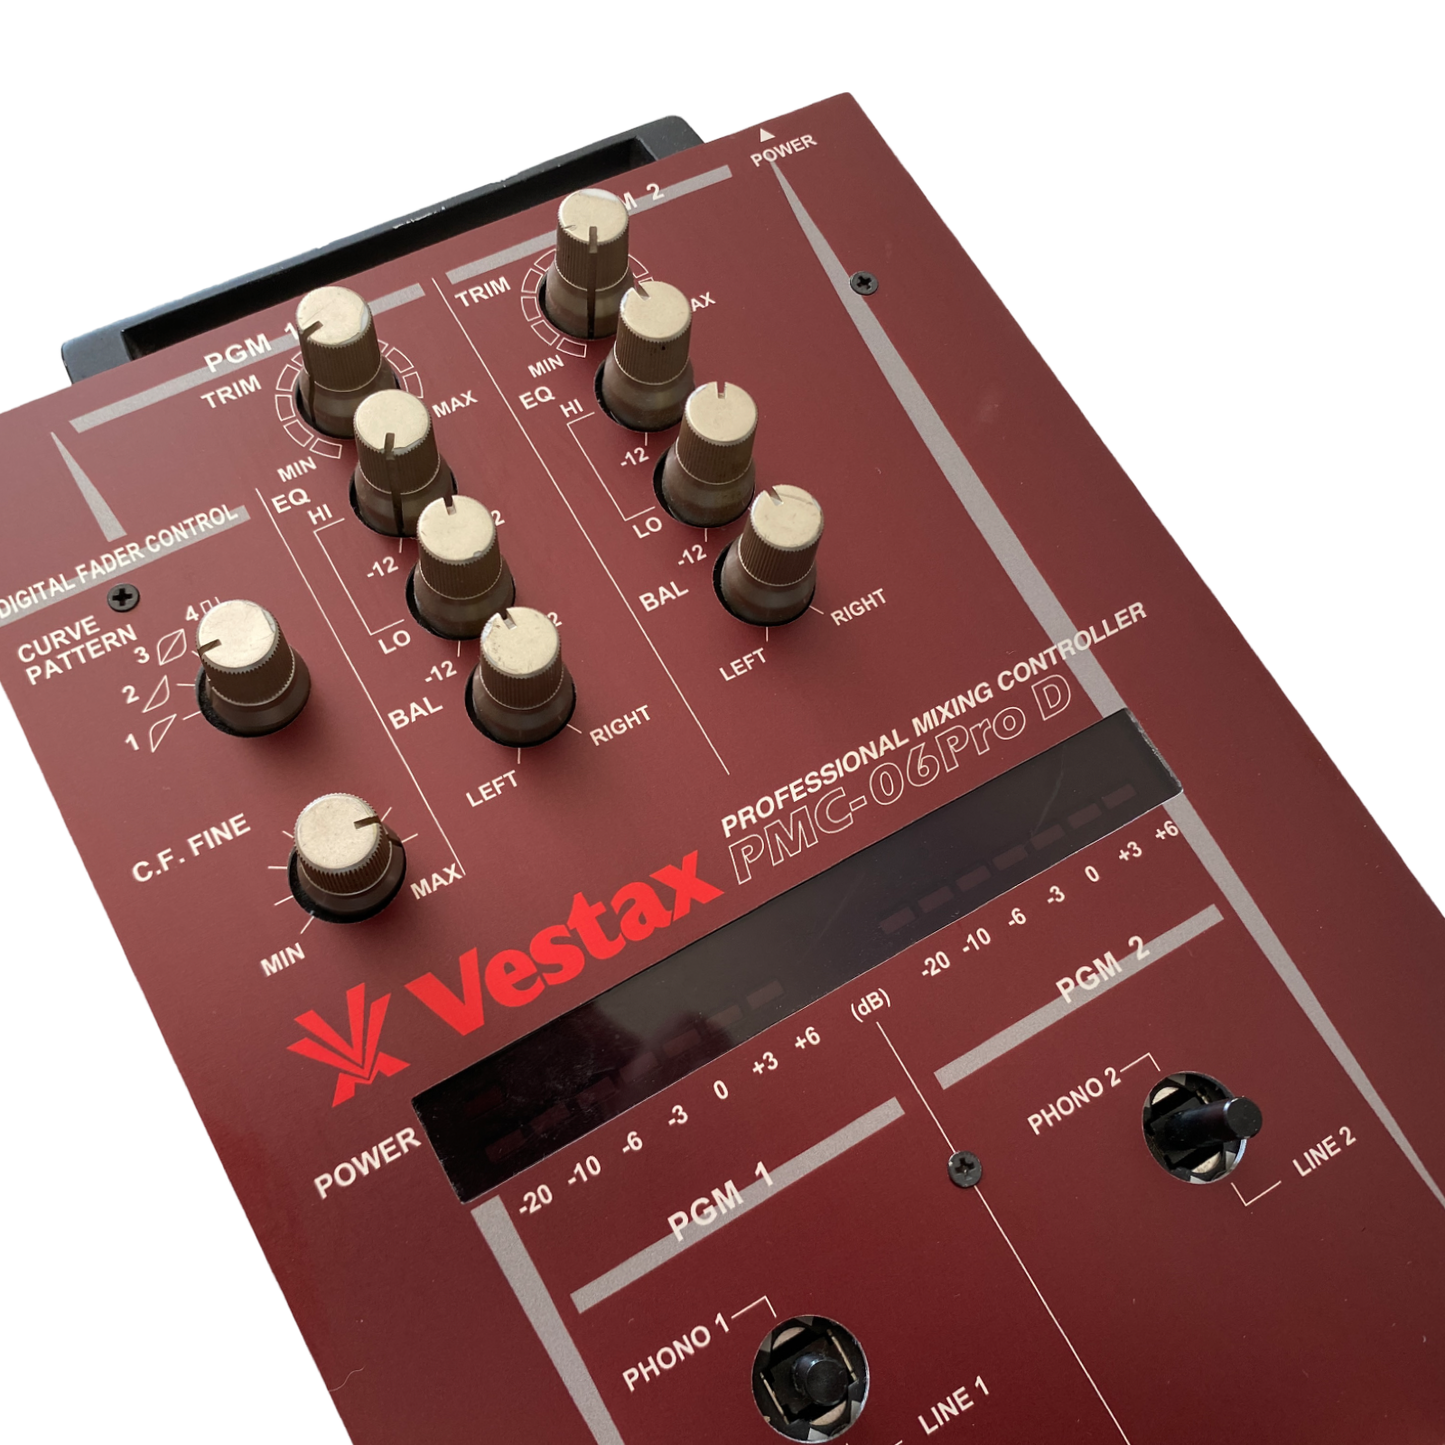 Vestax PMC-06 Pro D Samurai Reproduction Faceplate